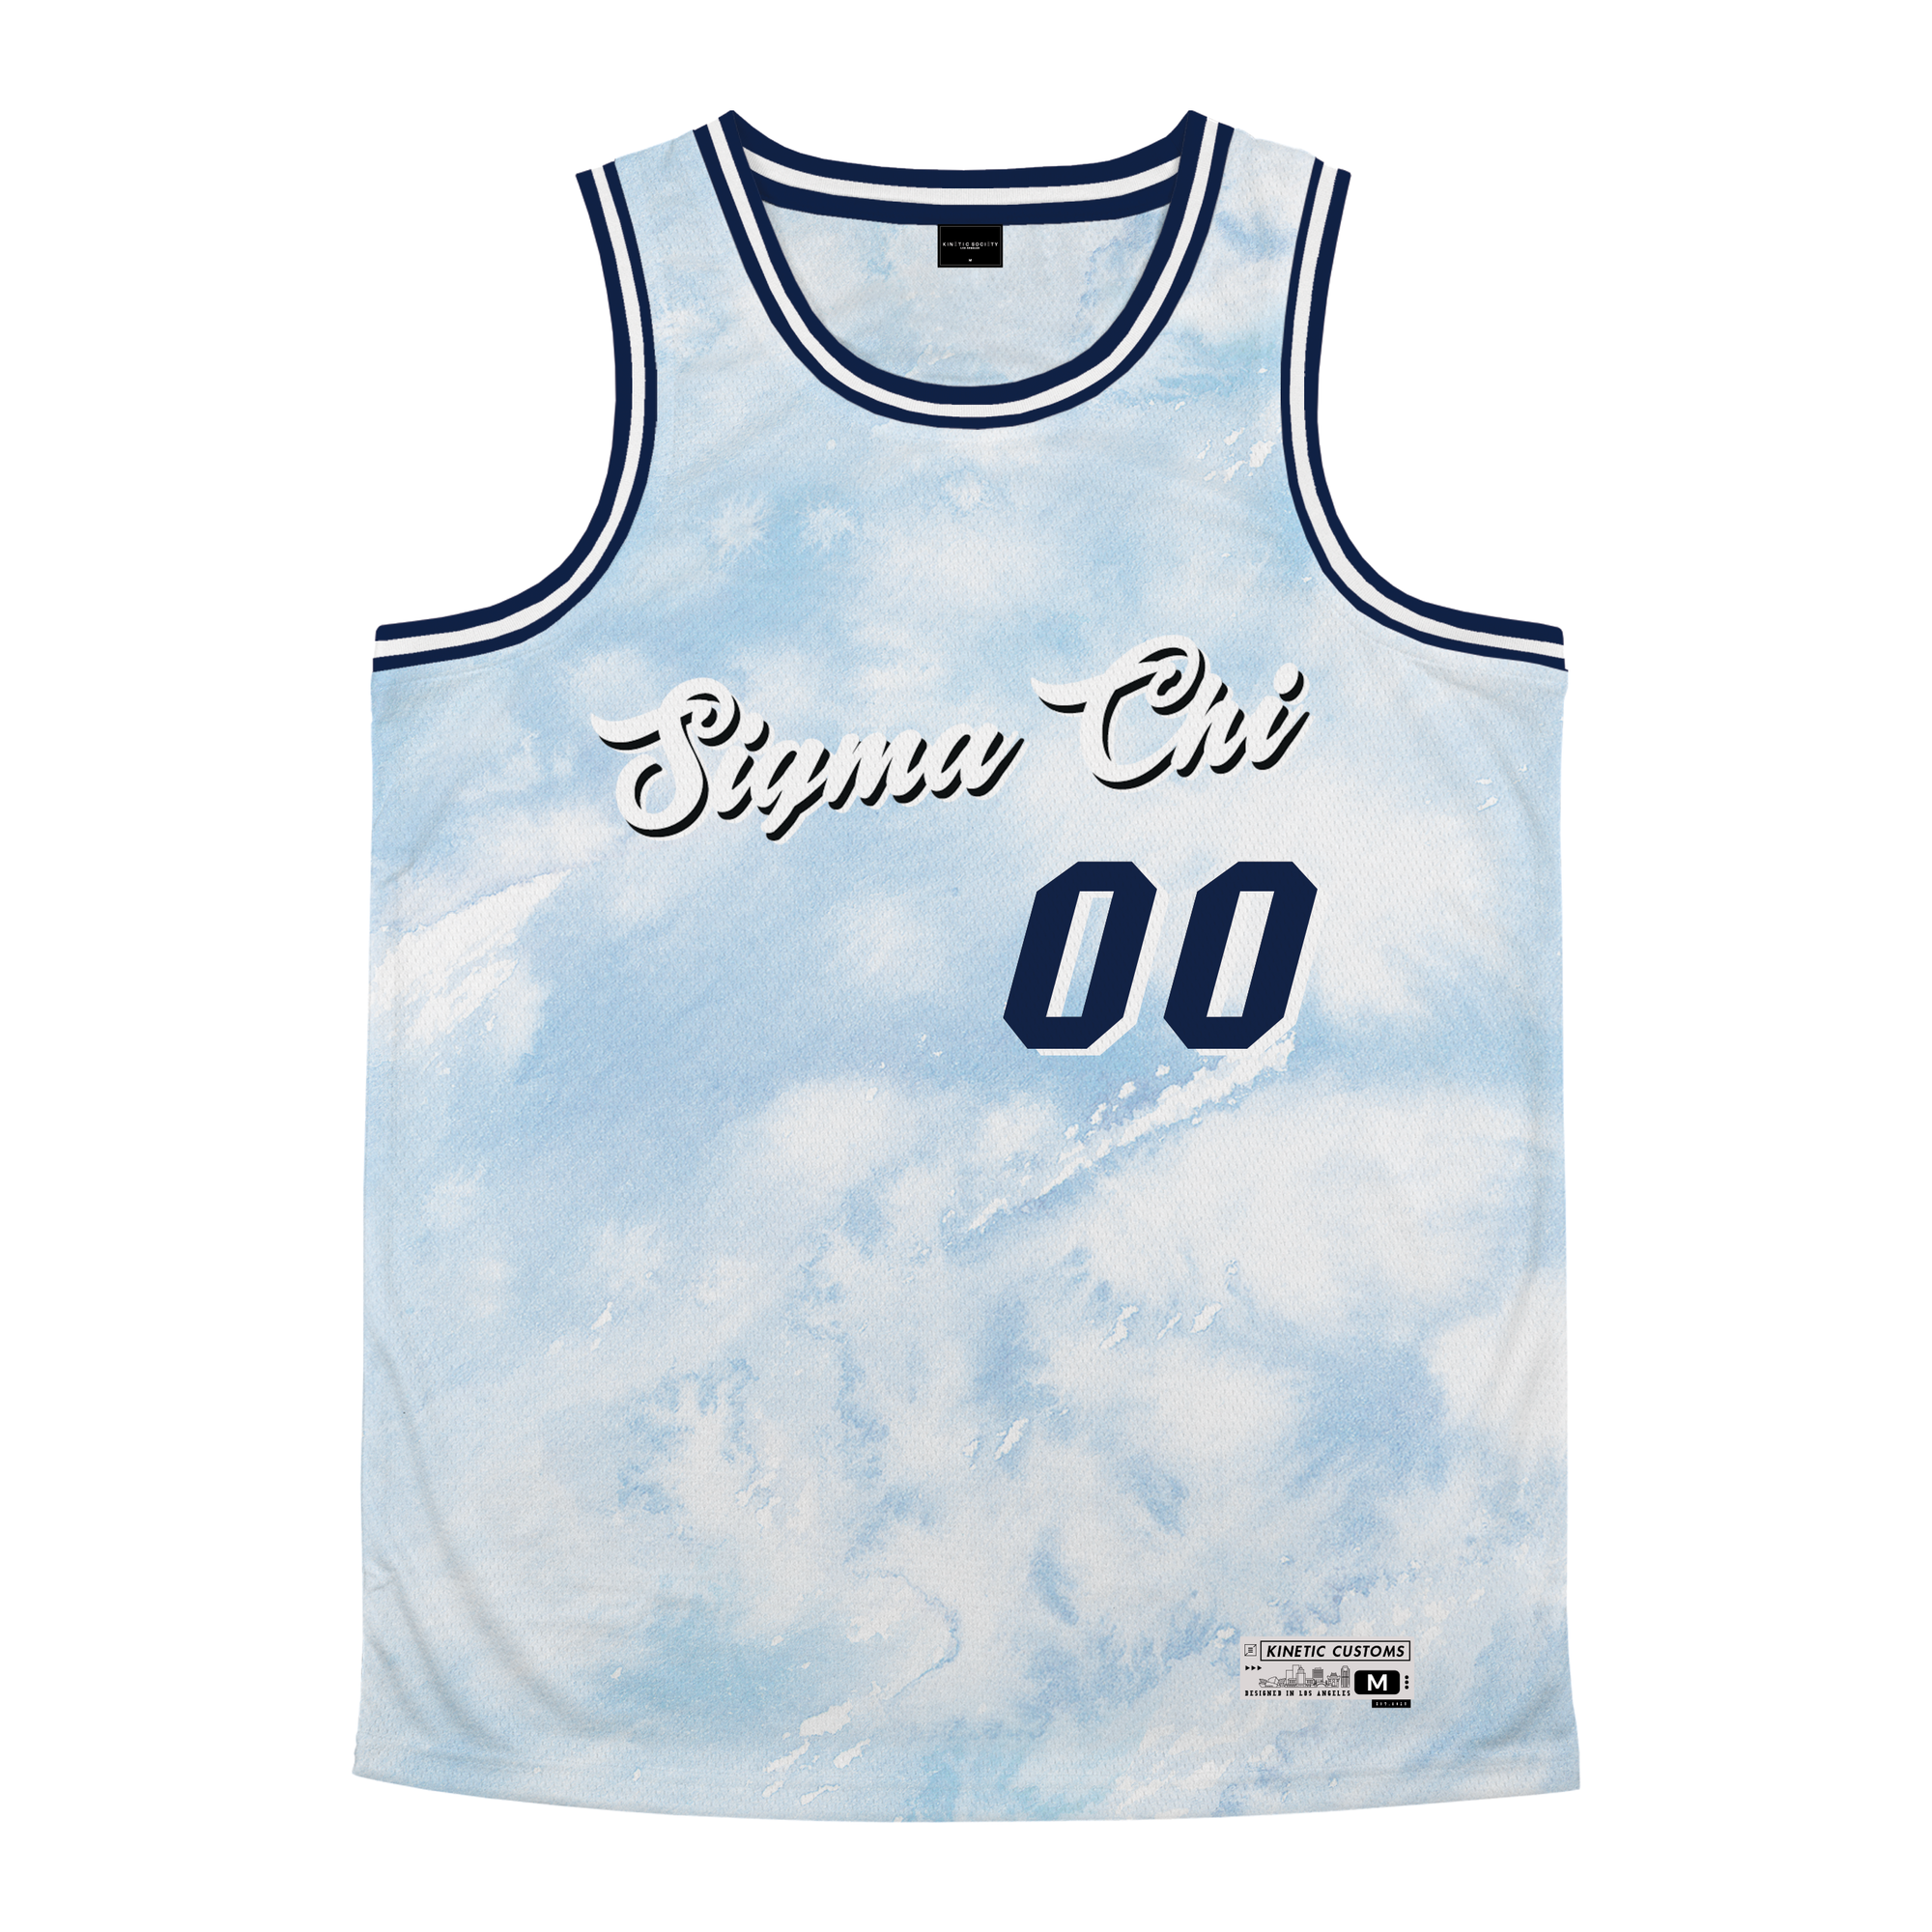 Sigma Chi - Blue Sky Basketball Jersey